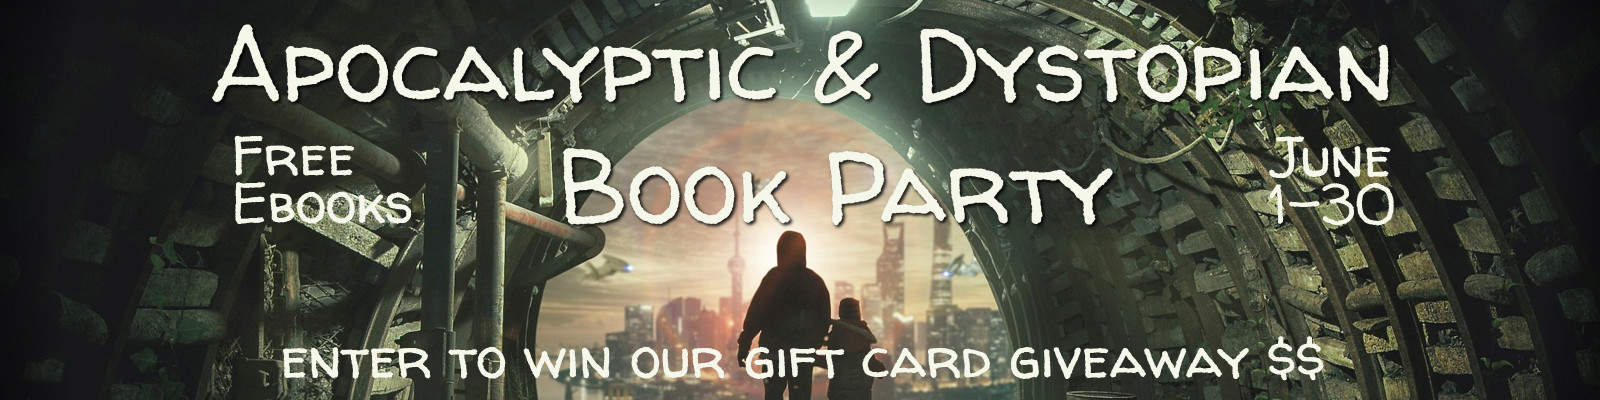 Apocalyptic & Dystopian Book Party